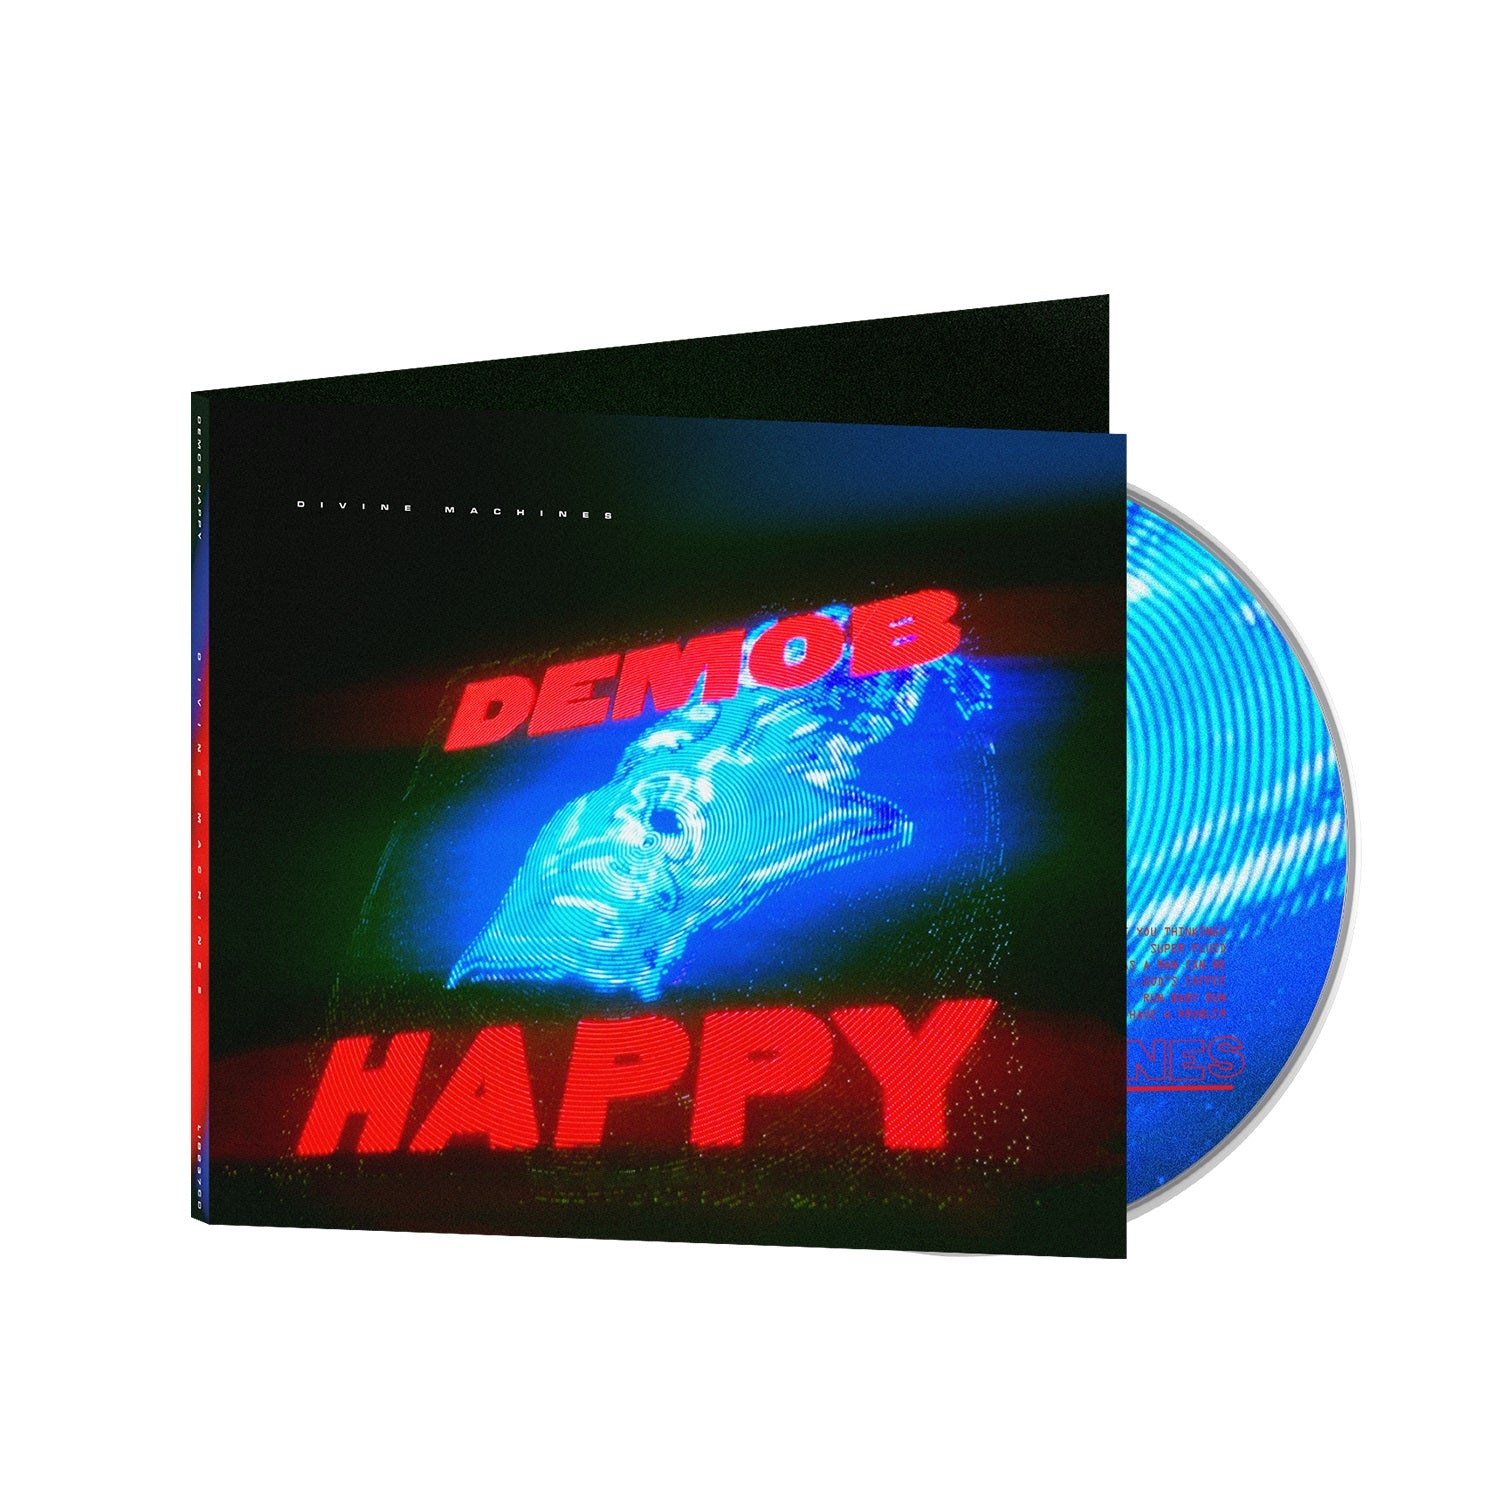 Demob Happy - Divine Machines: CD